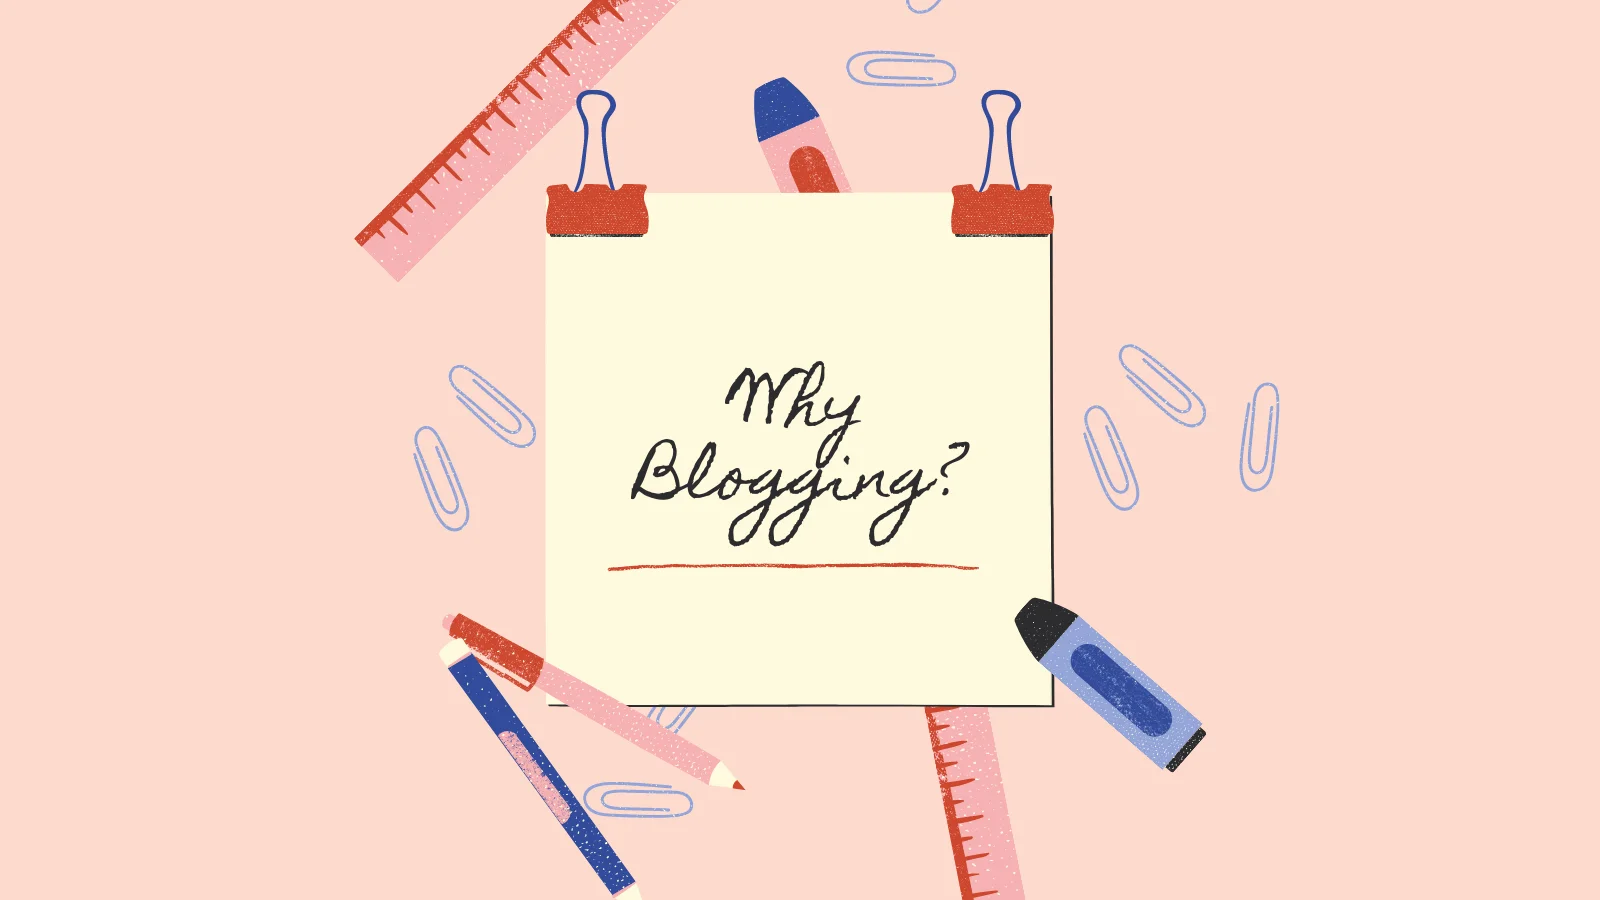 Why blogging?